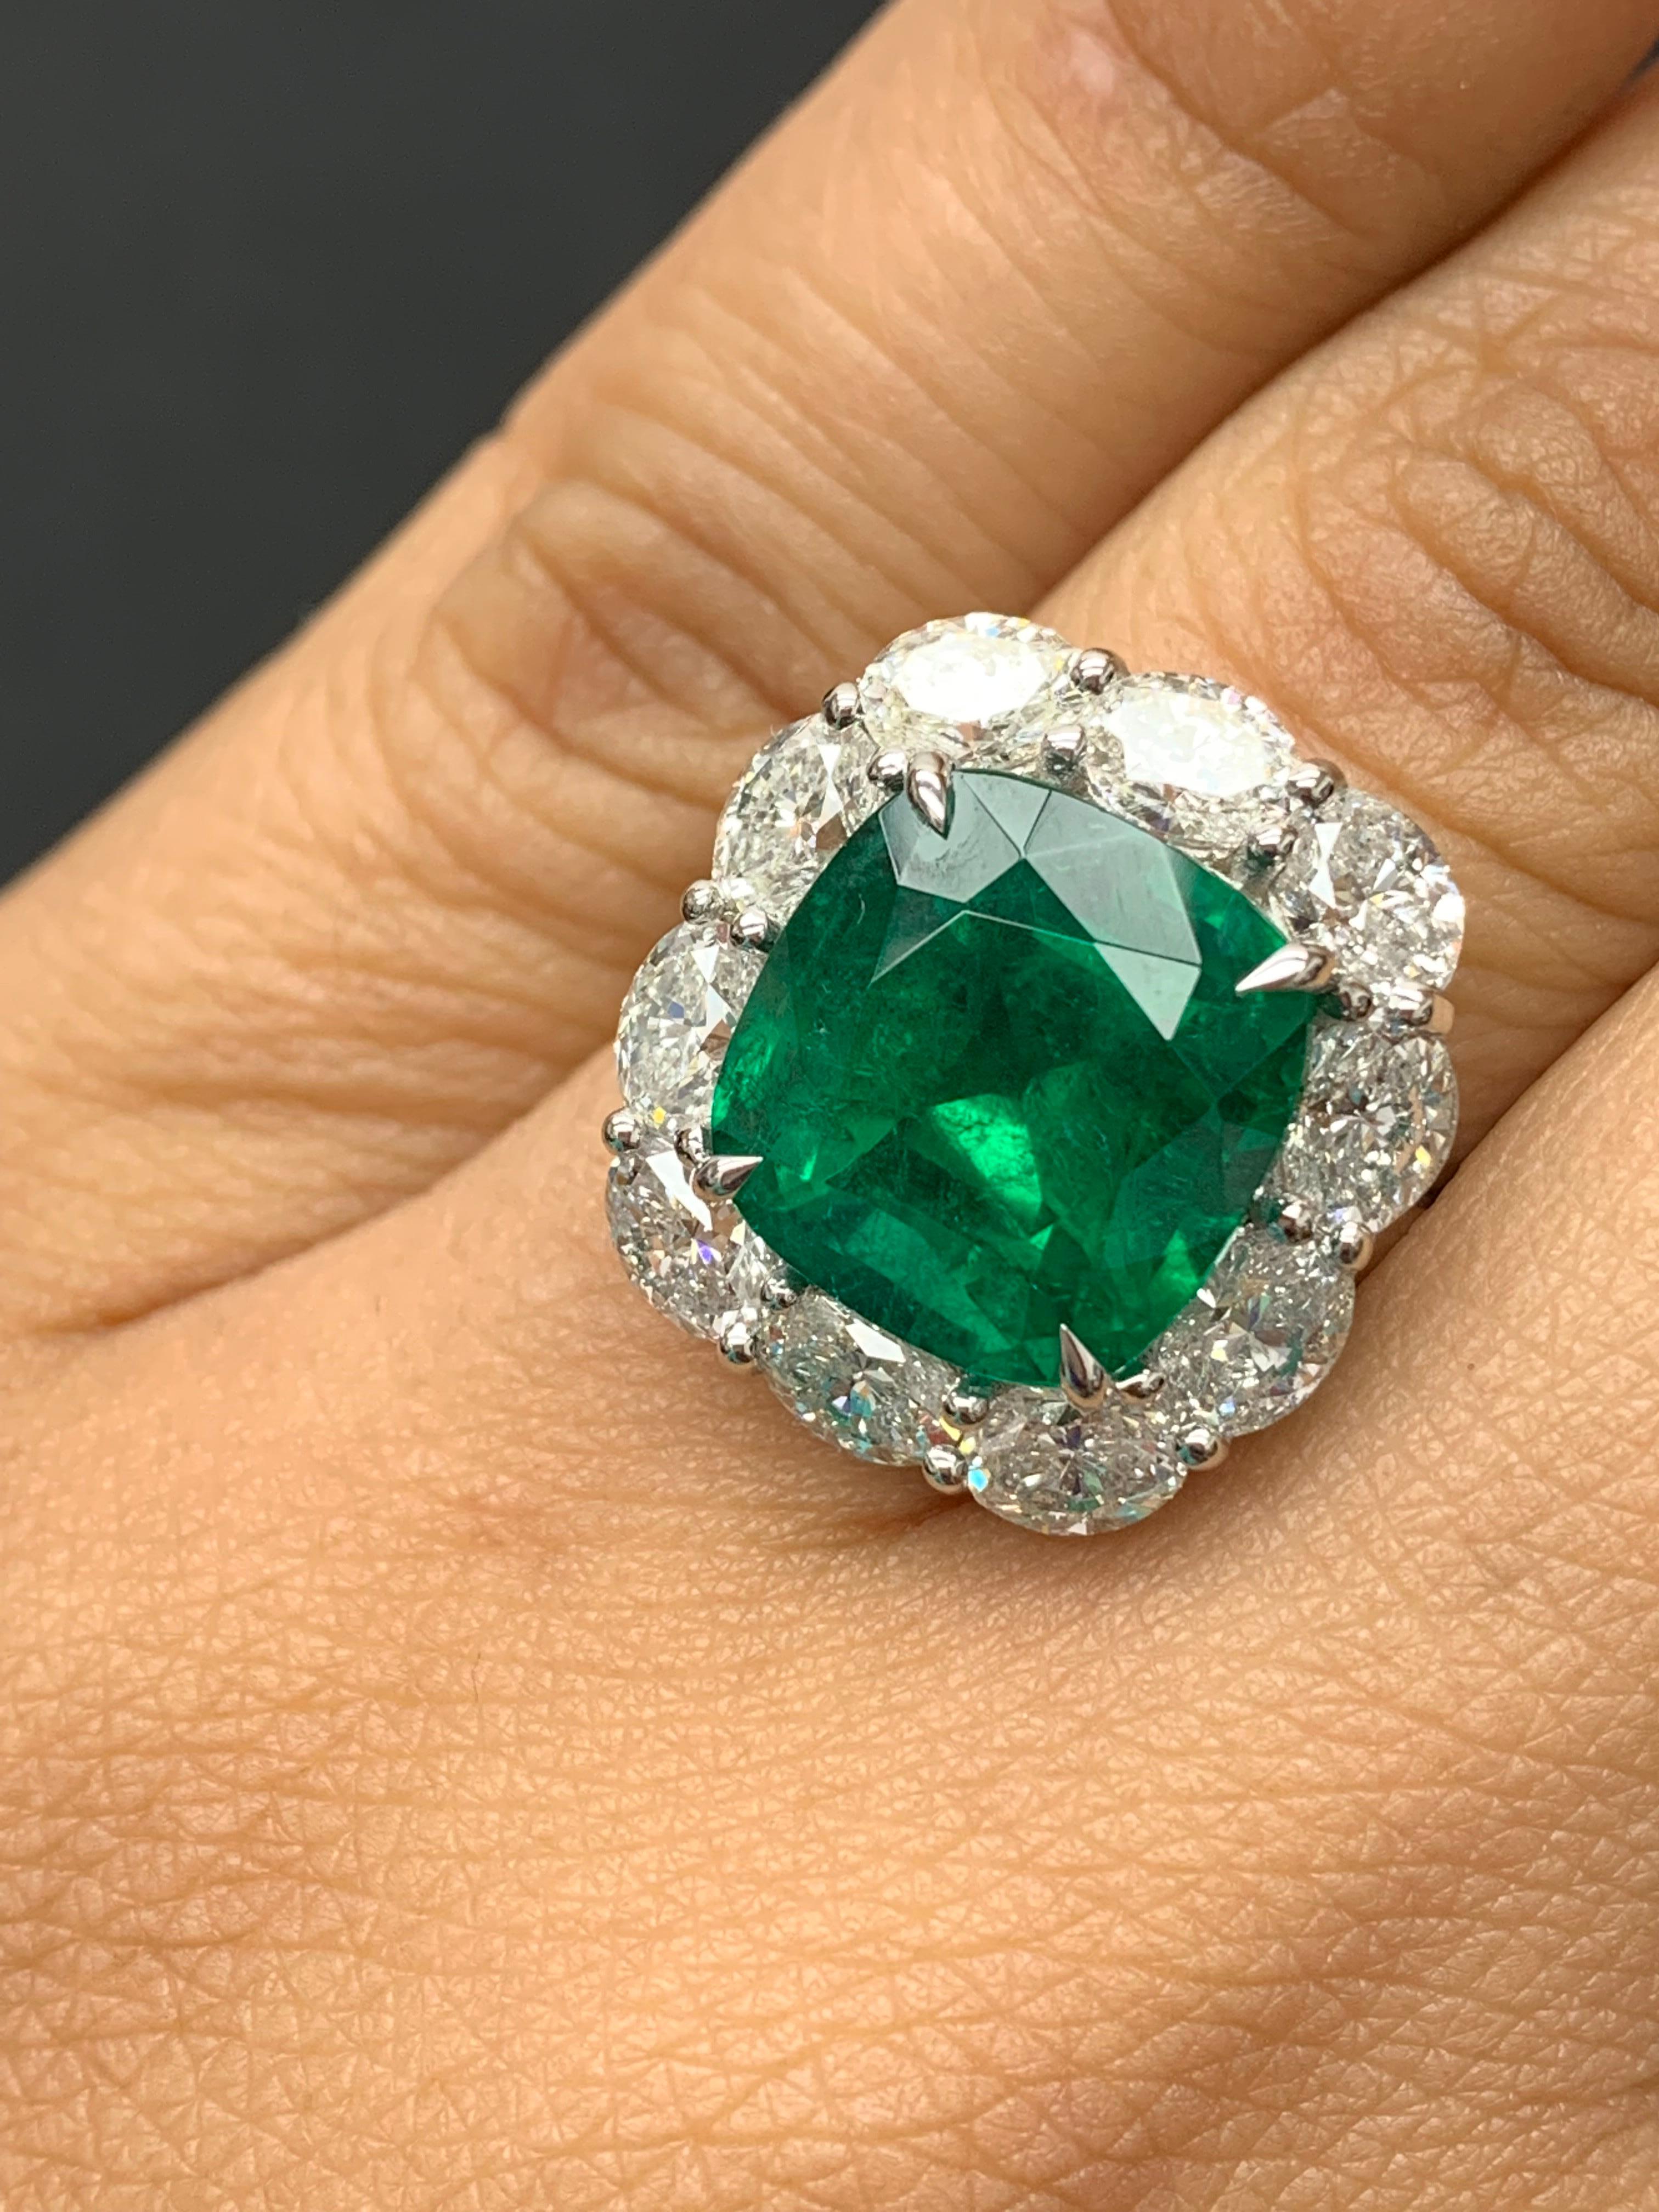 Certified 6.58 Carat Cushion Cut Emerald Diamond Ring in Platinum For Sale 3